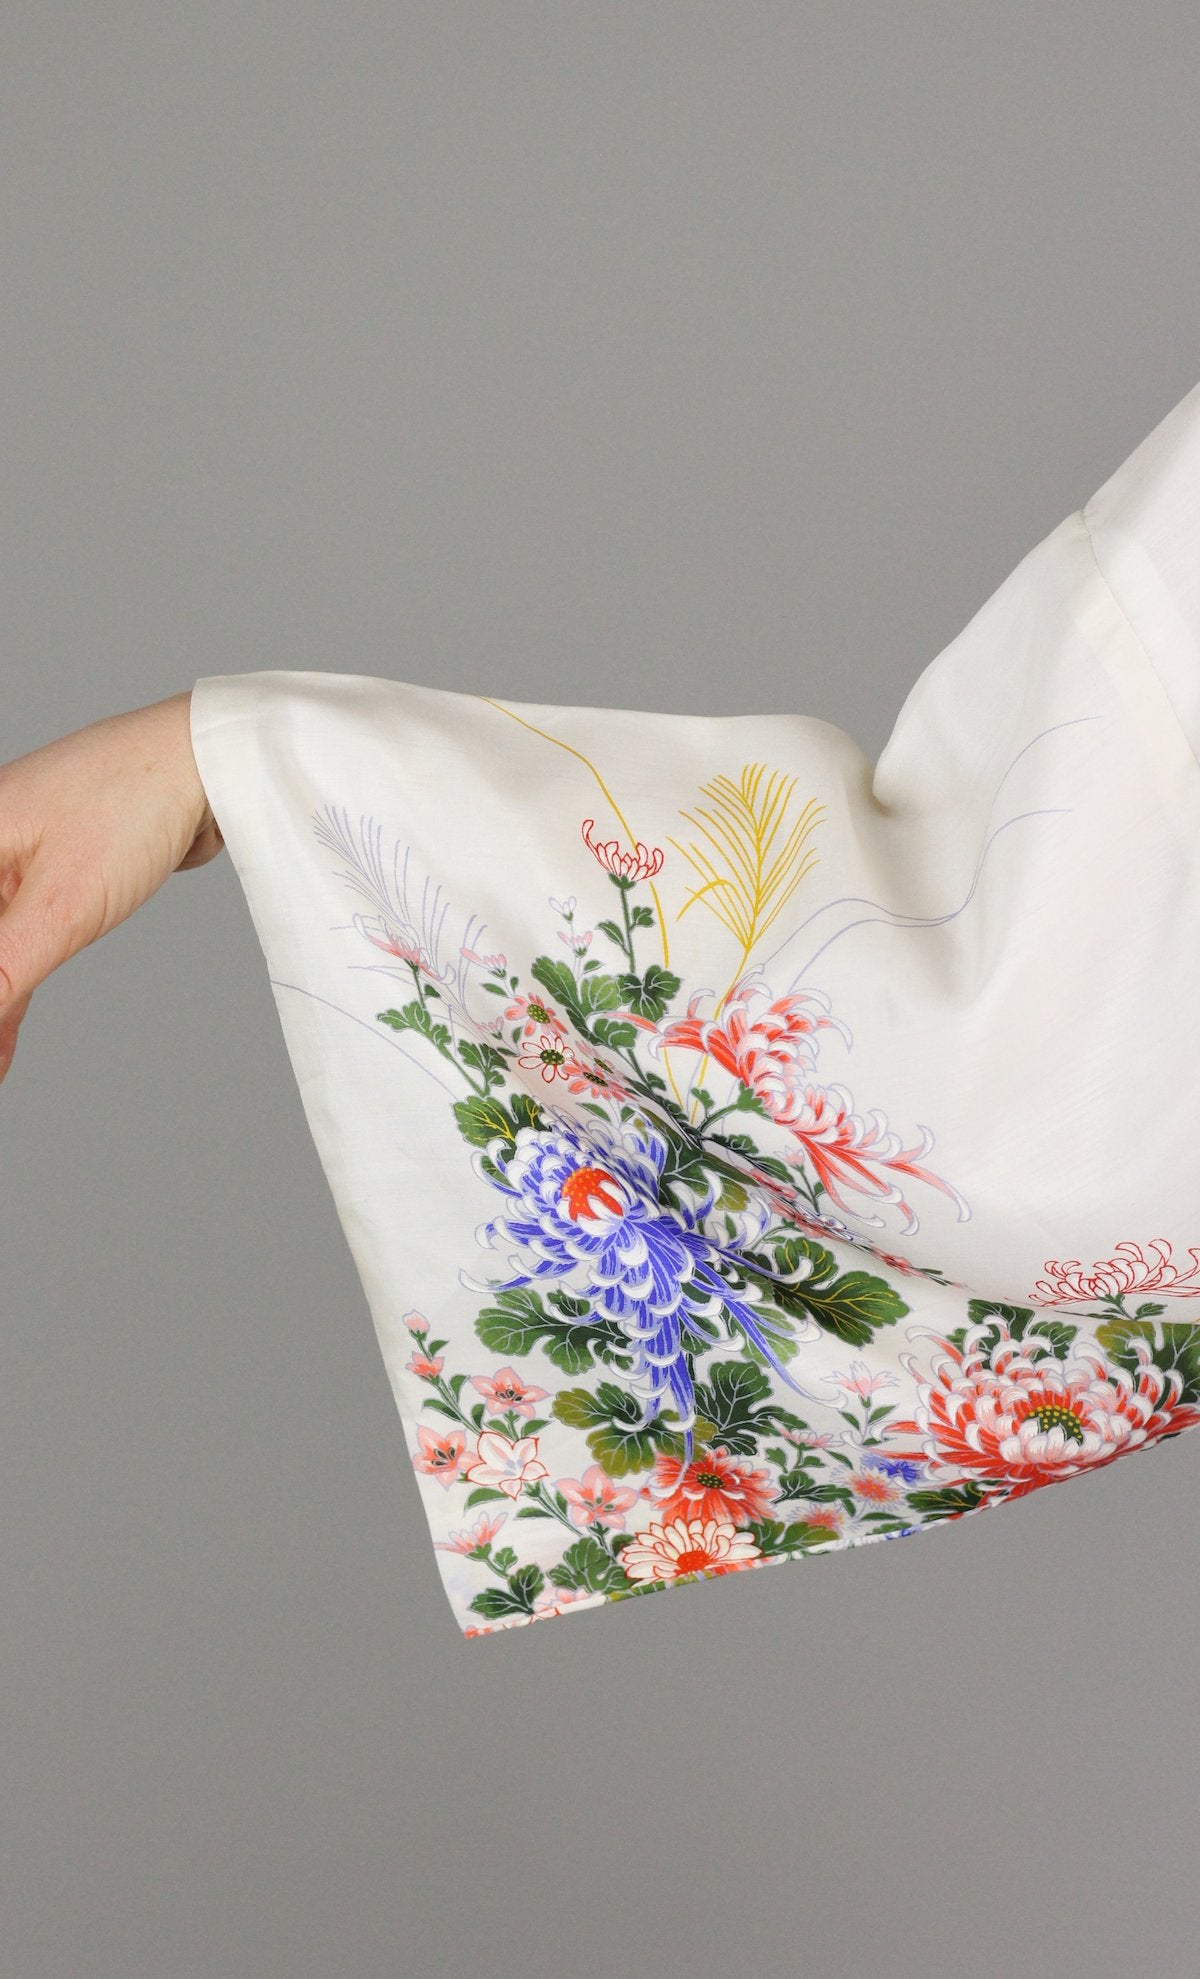 Vintage I Magnin Ivory Silk Floral Kimono Robe